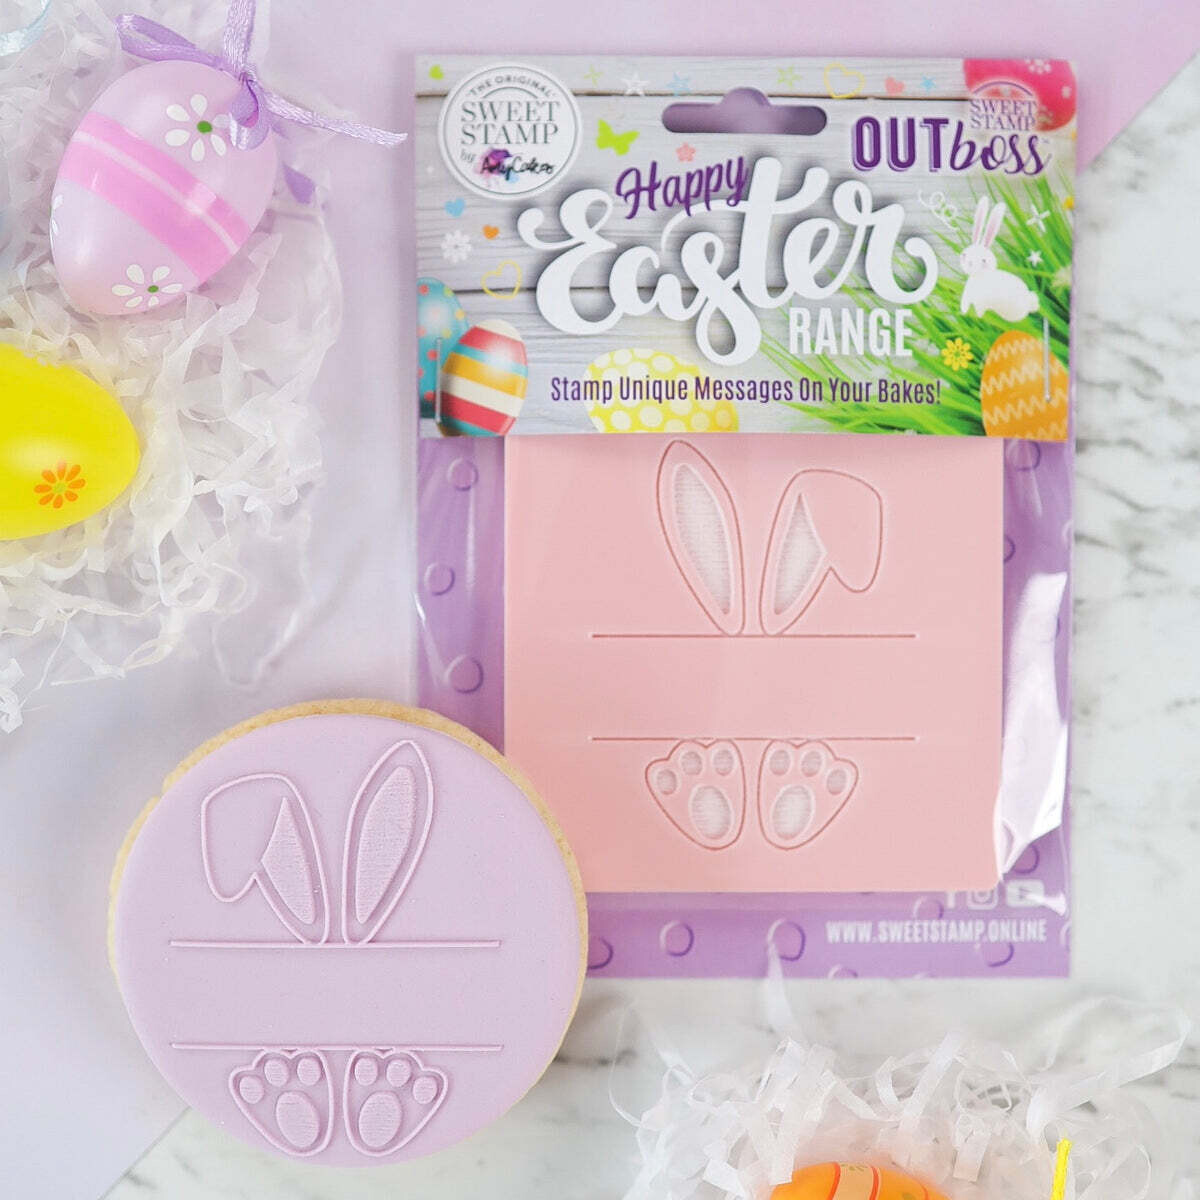 Sweet Stamp -OUTboss Easter -BUNNY NAME CARD - Πασχαλινή Σφραγίδα Λαγουδάκι με ταμπελάκι